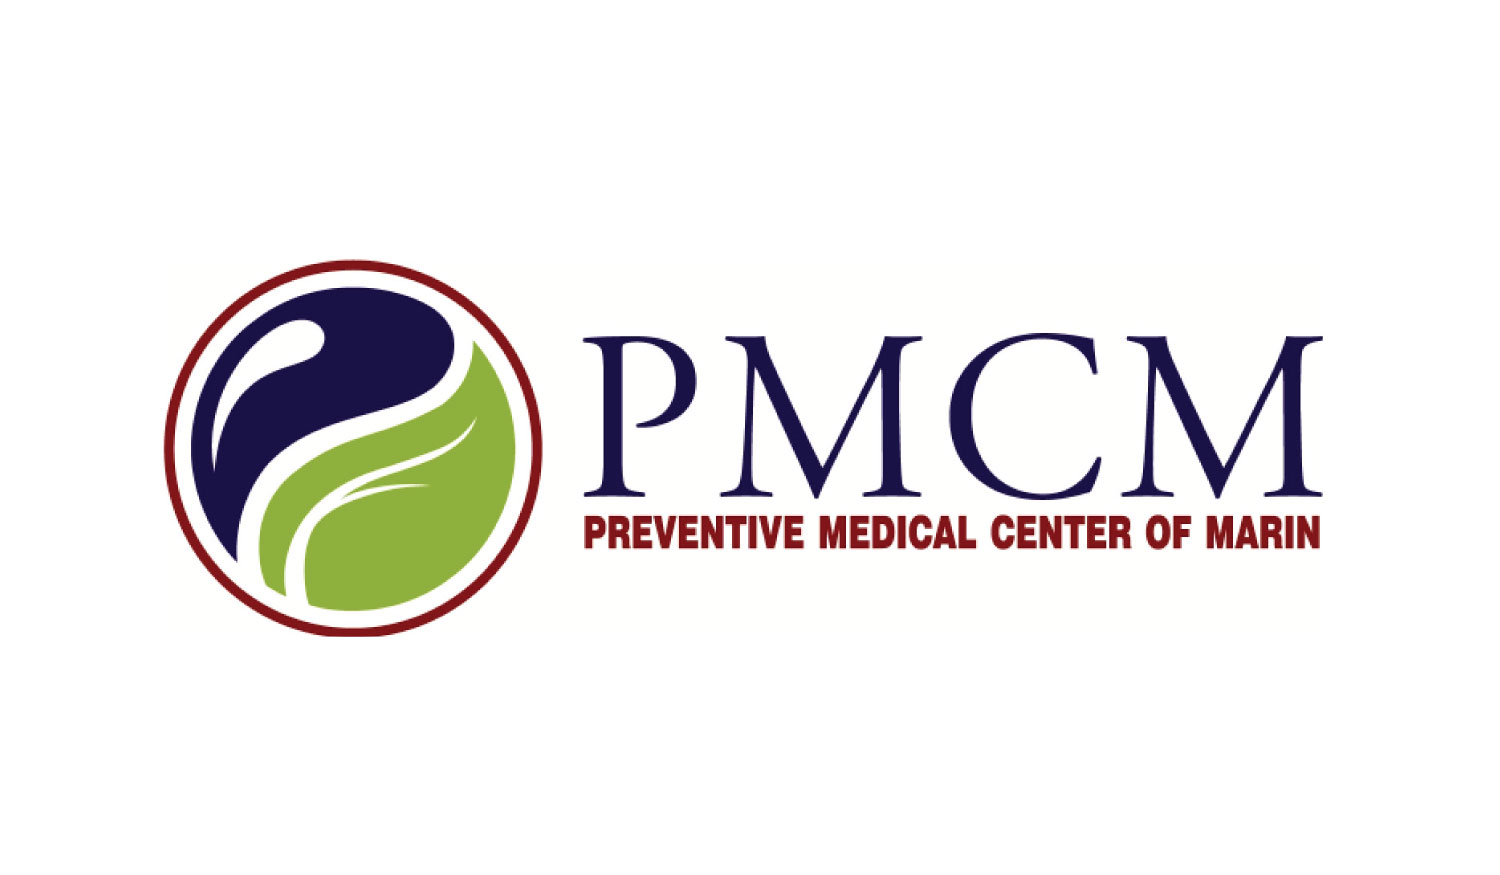 Preventive Medical Center of Marin